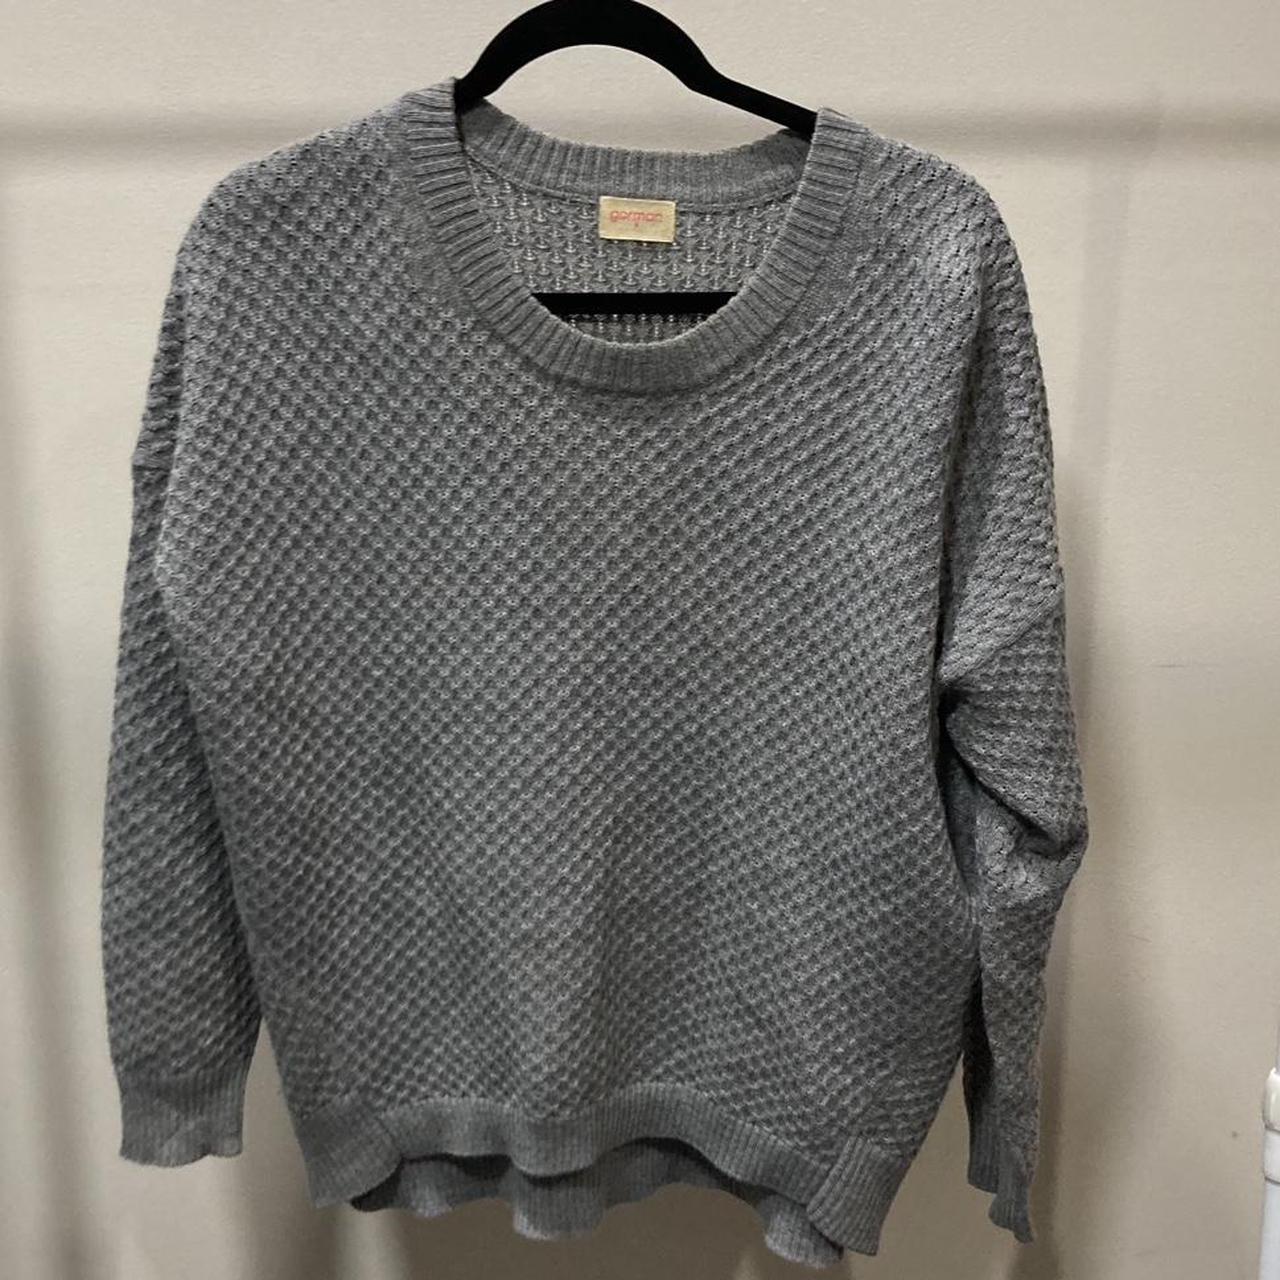 Gorman jumper - $55 Merino wool blend Size... - Depop